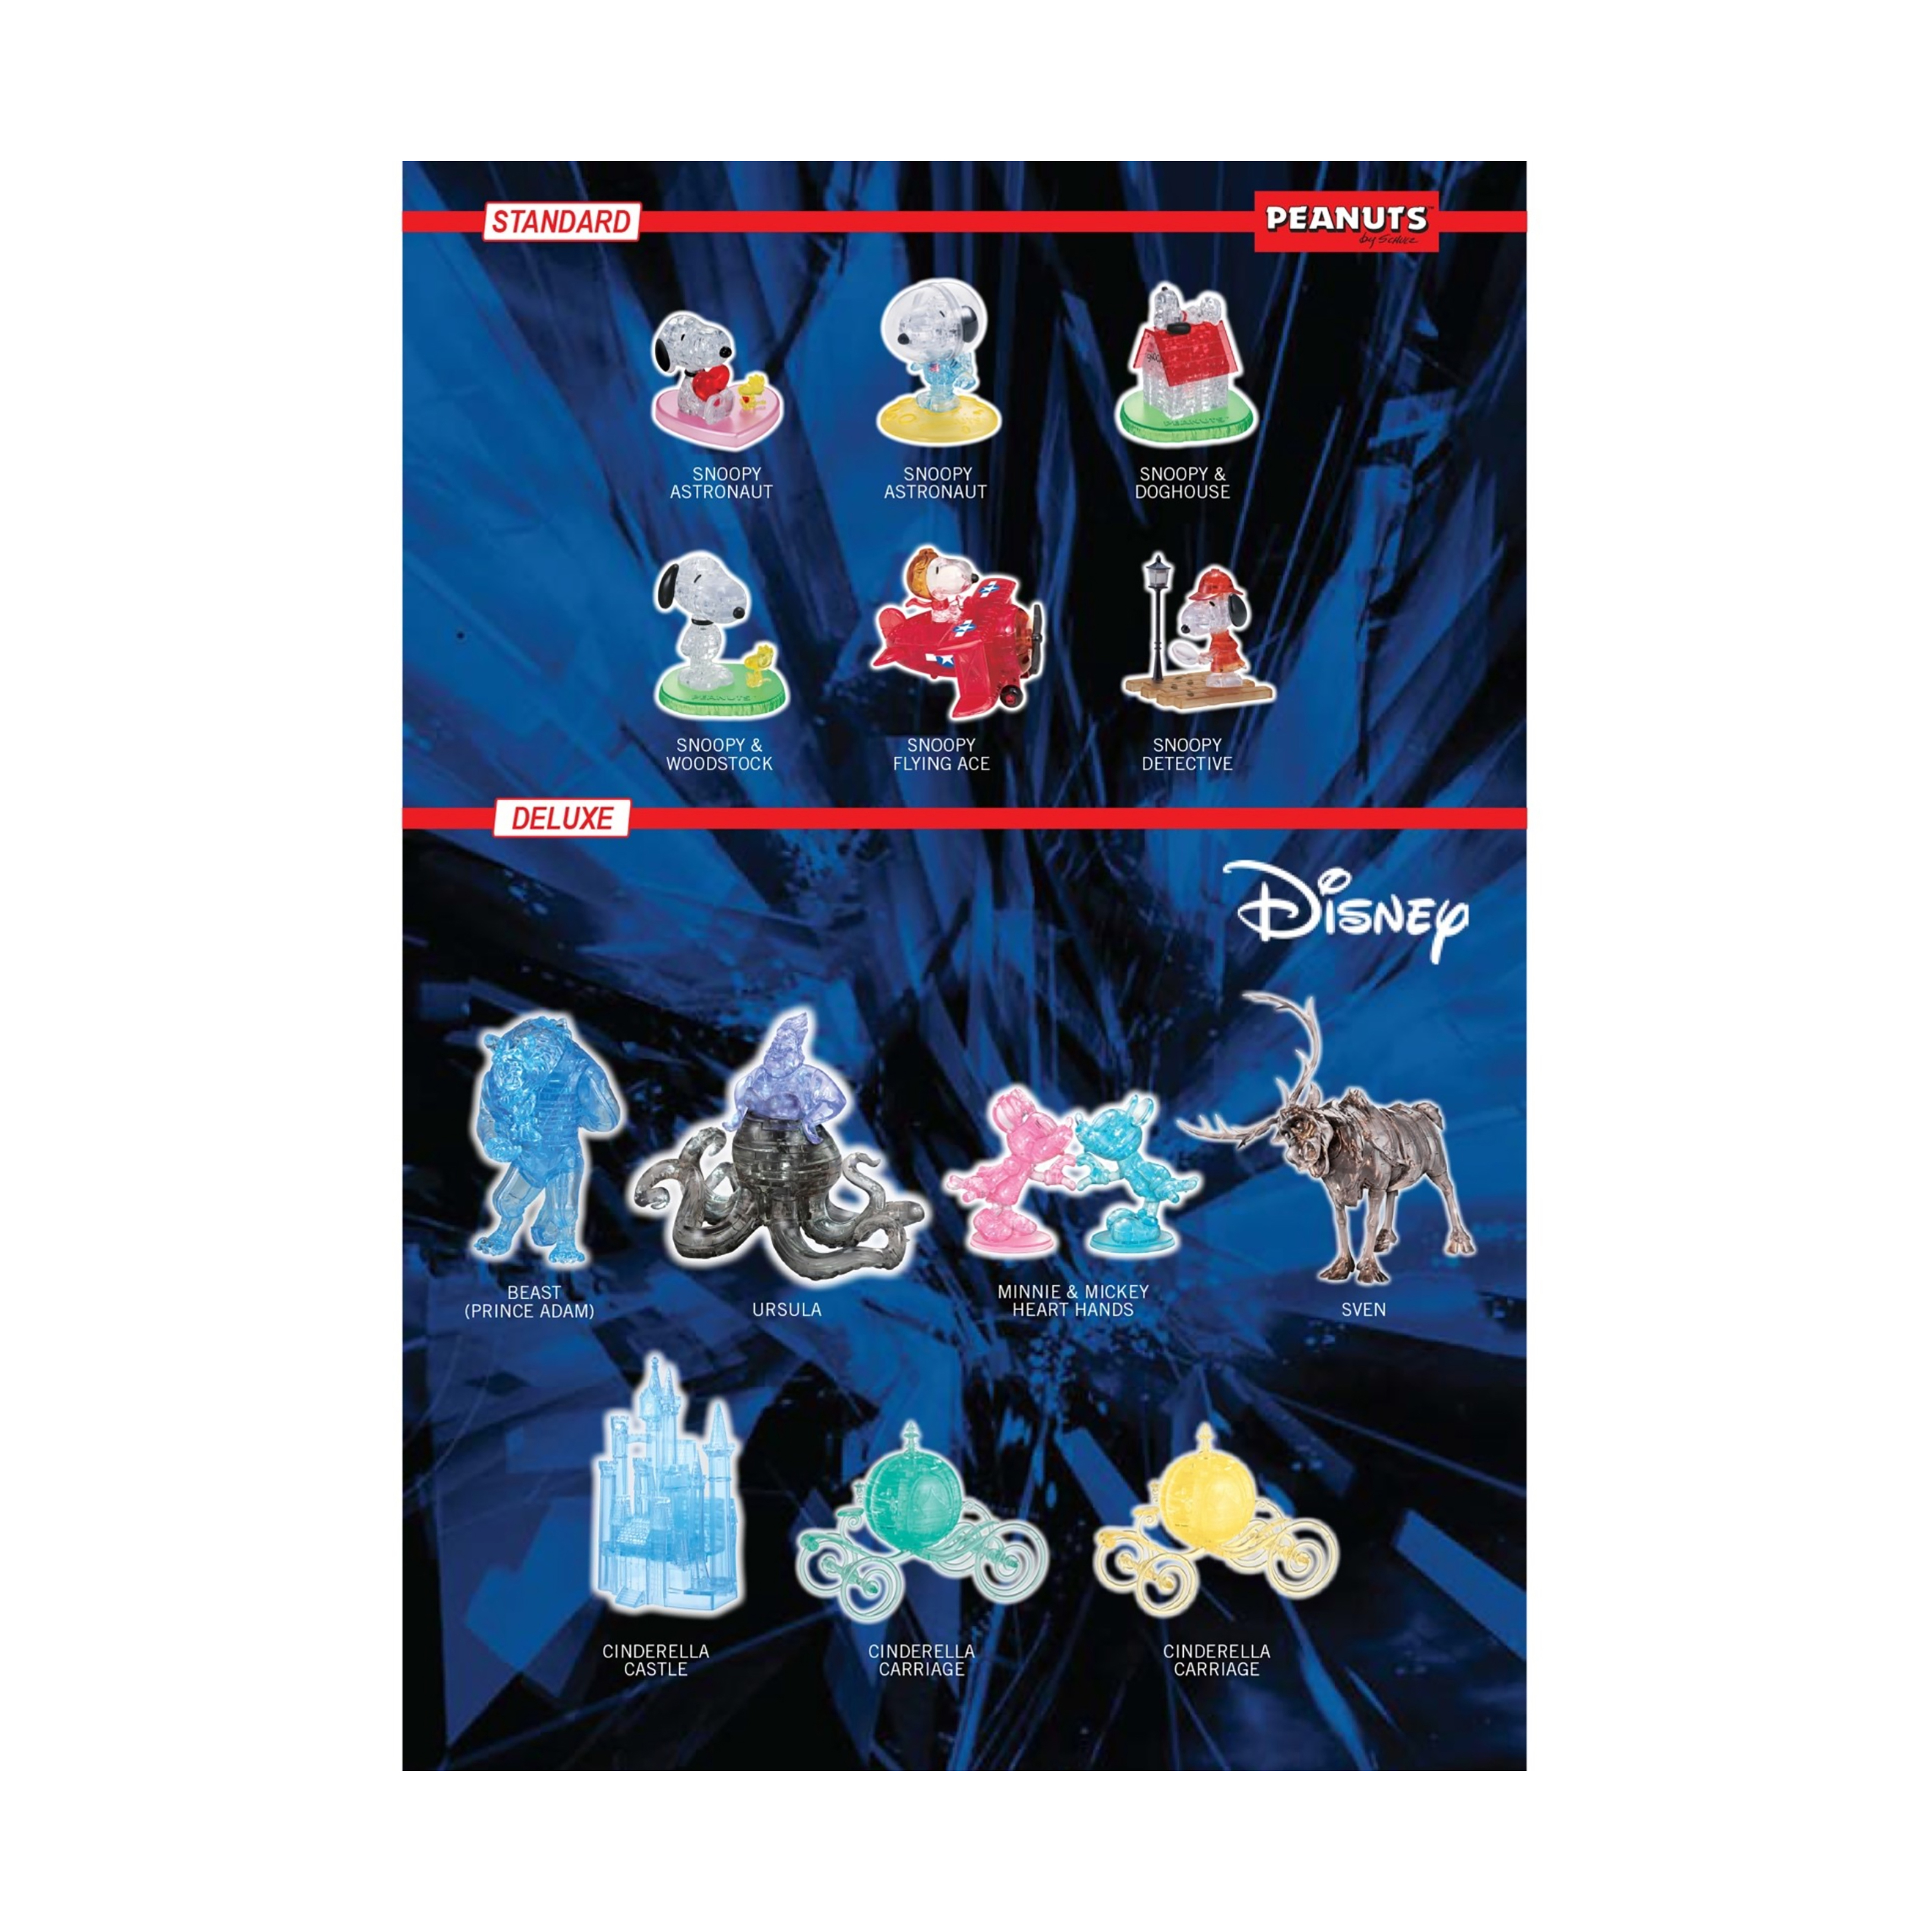 Bepuzzled 3D Crystal Puzzle - Disney 100 Platinum Edition - Marie: 45 Pcs